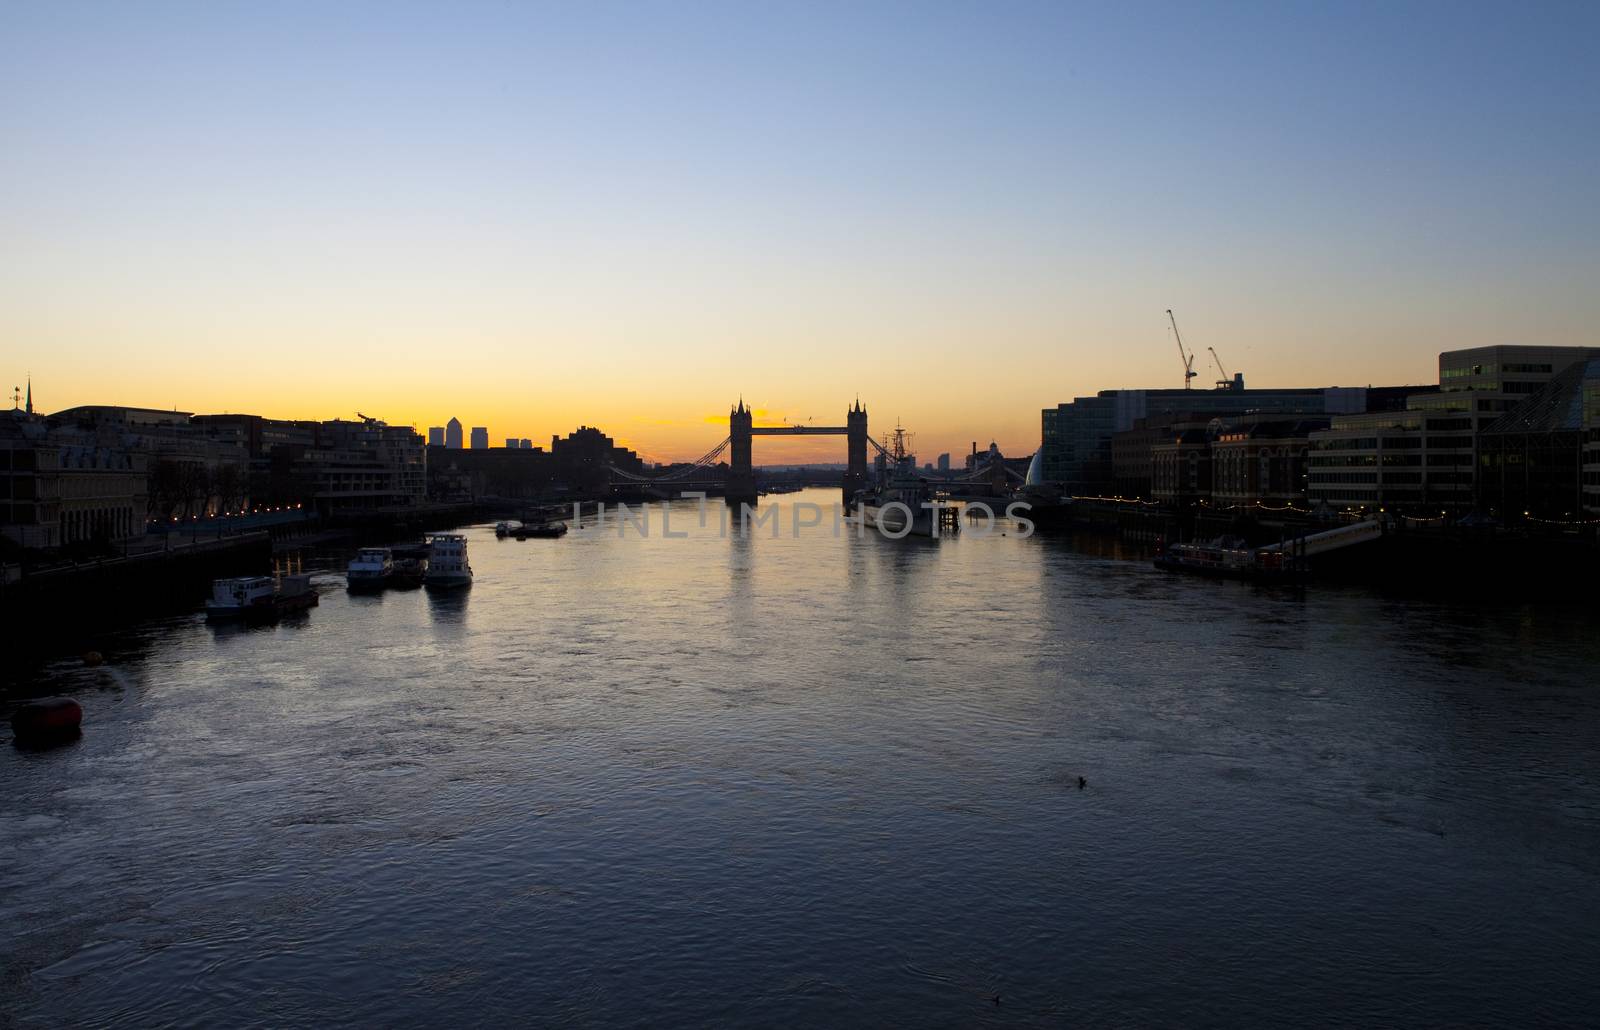 London Sunrise by chrisdorney